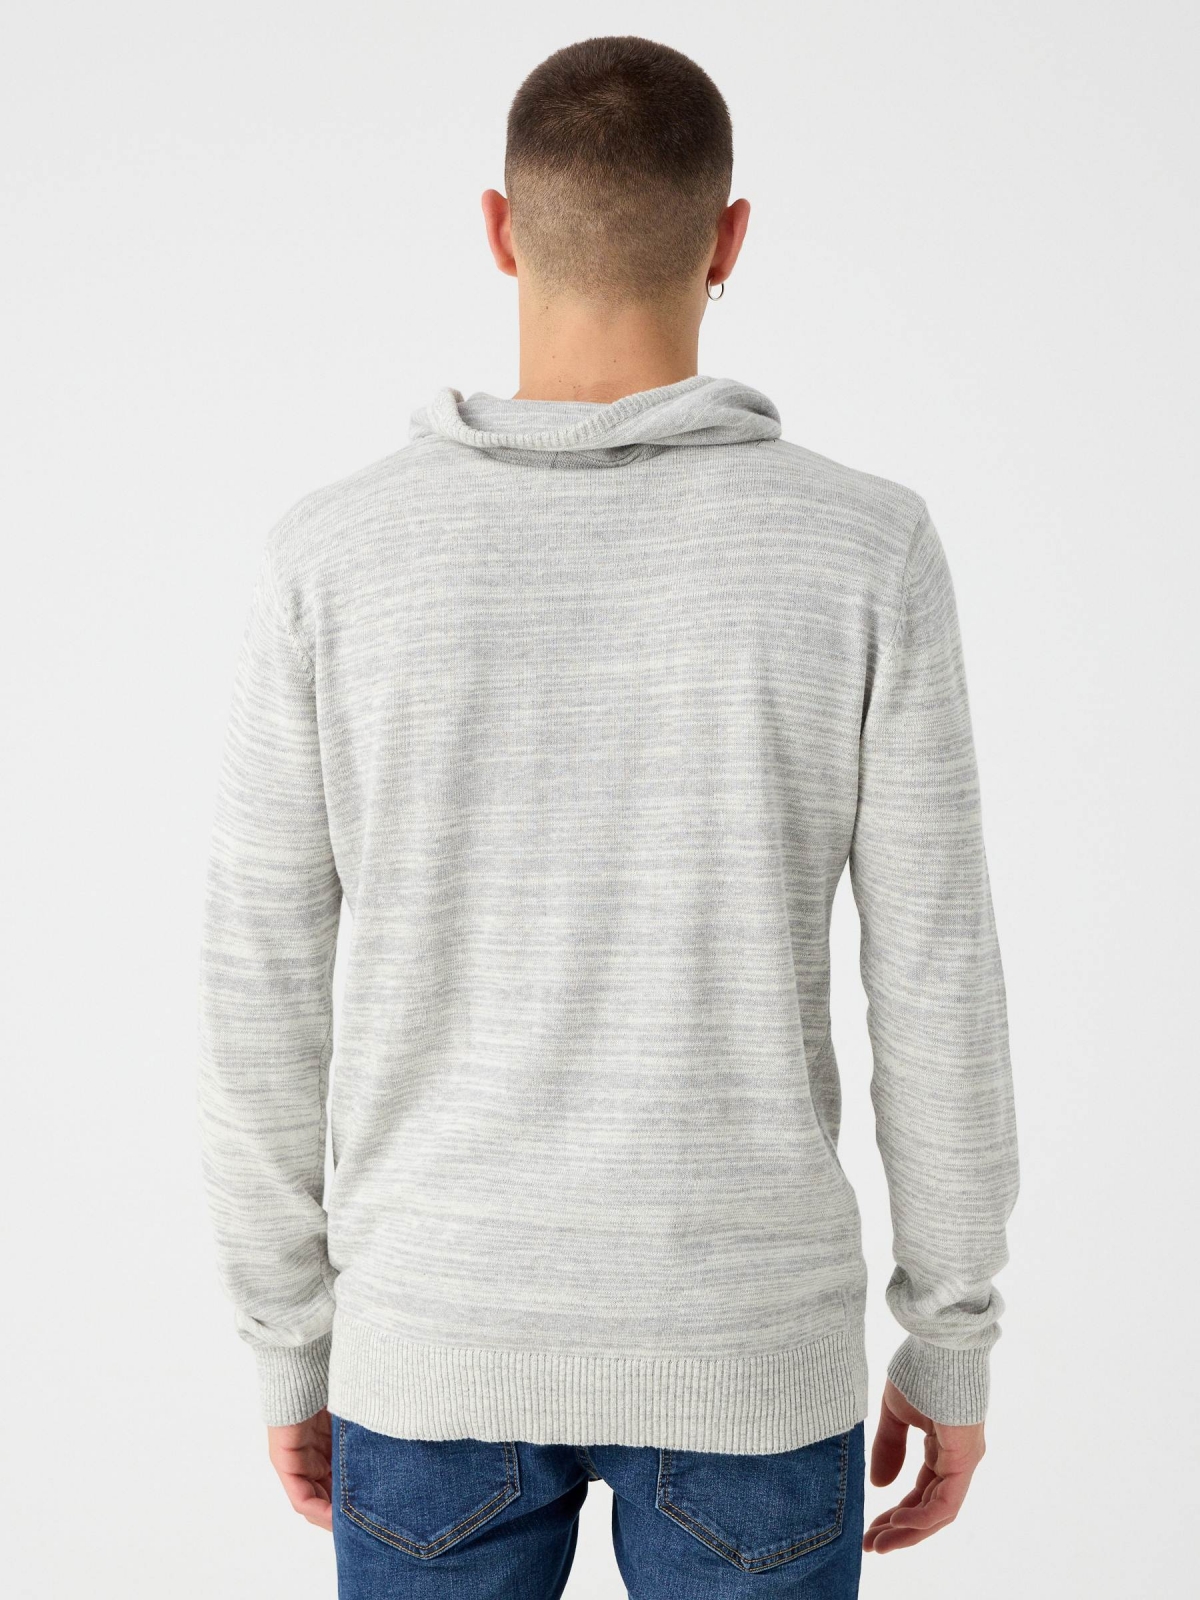 Fleece turtleneck sweater light grey middle back view